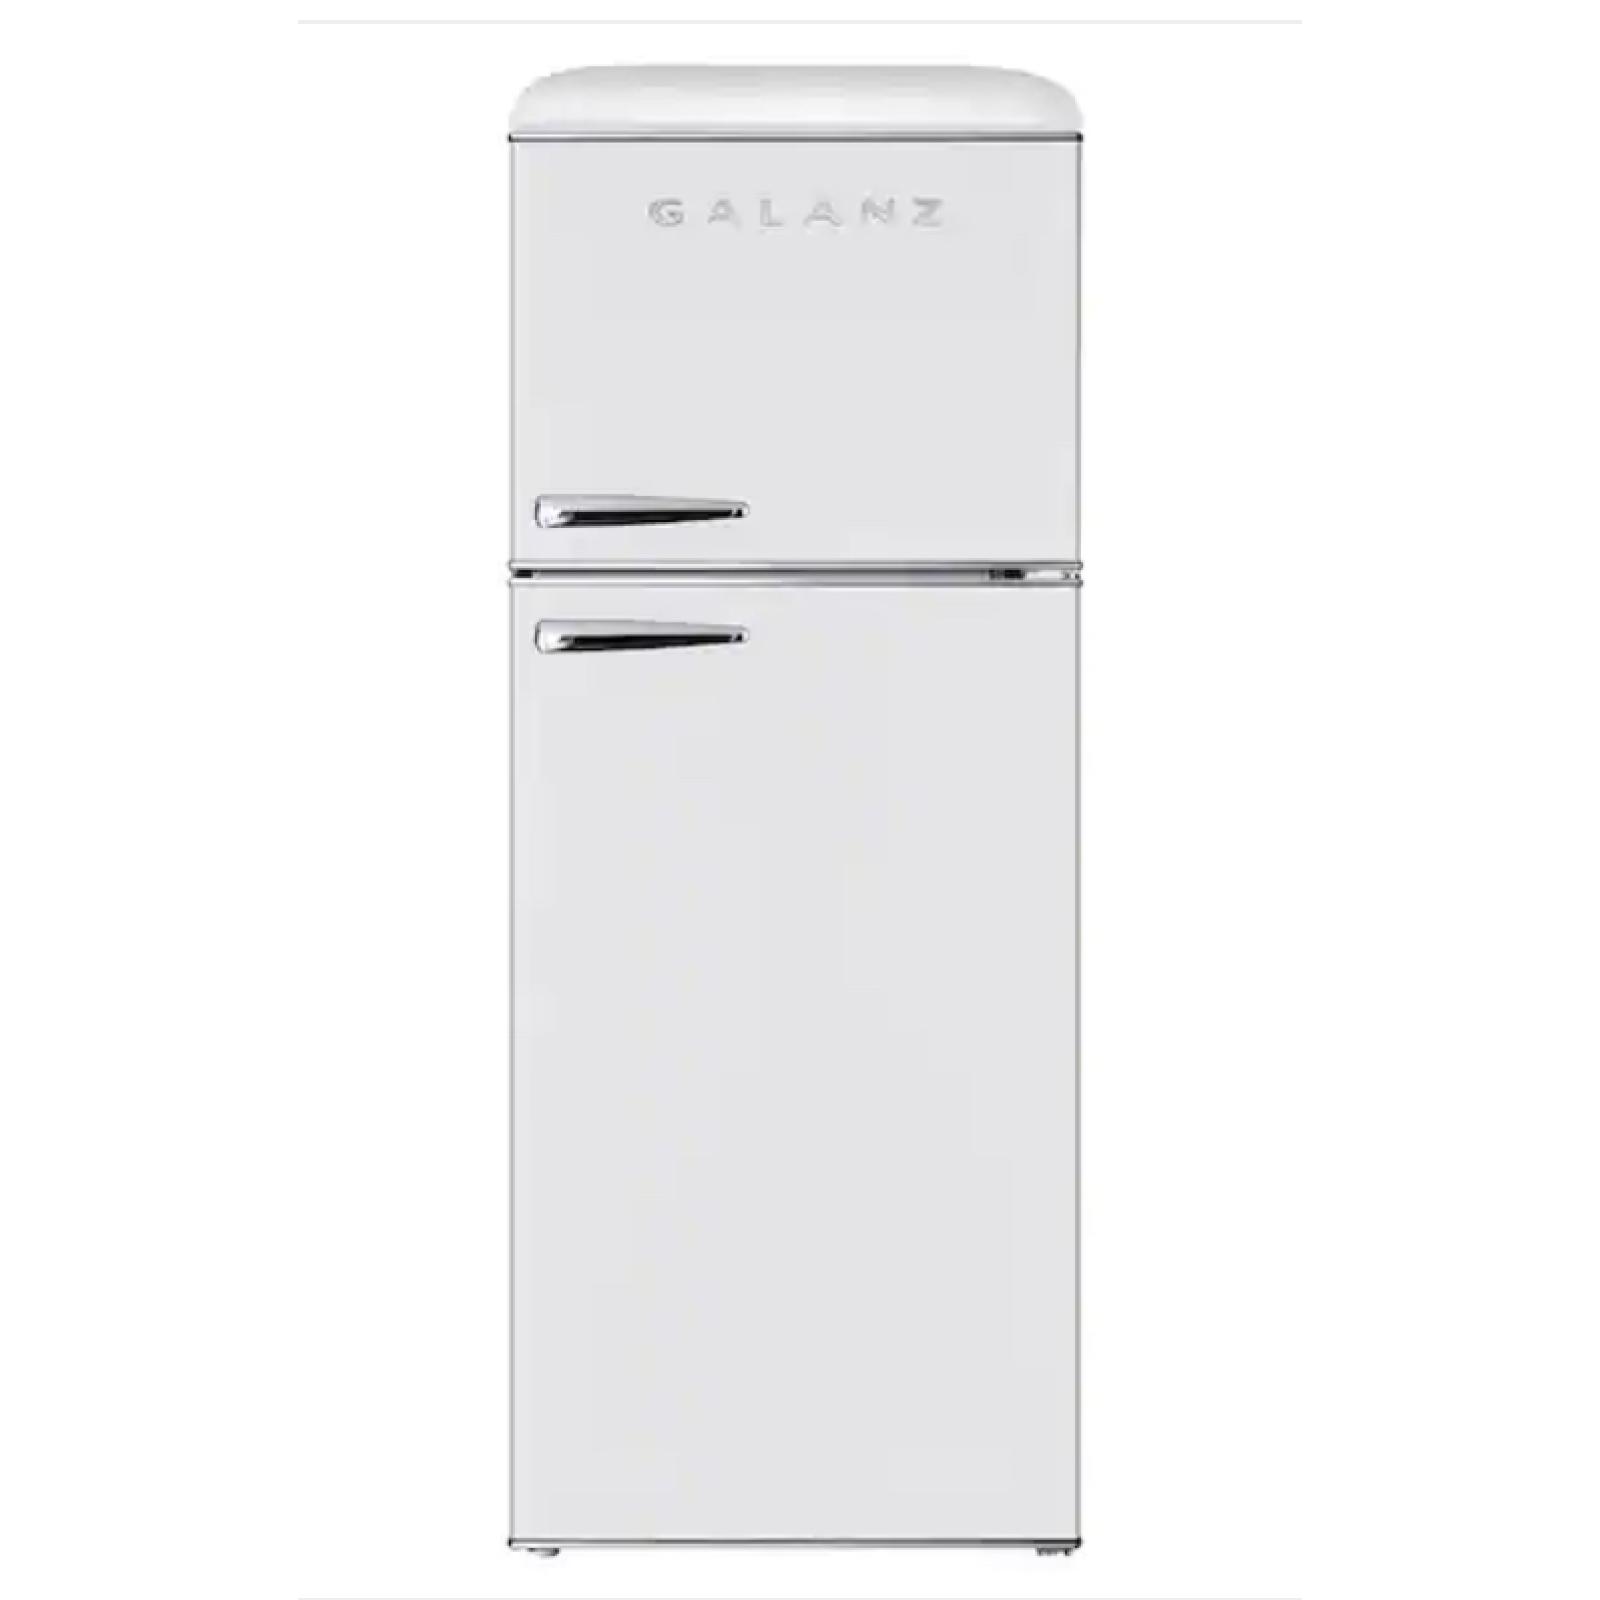 NEW! Galanz 10 cu. ft. Frost Free Top Freezer Refrigerator in Milkshake White, ENERGY STAR